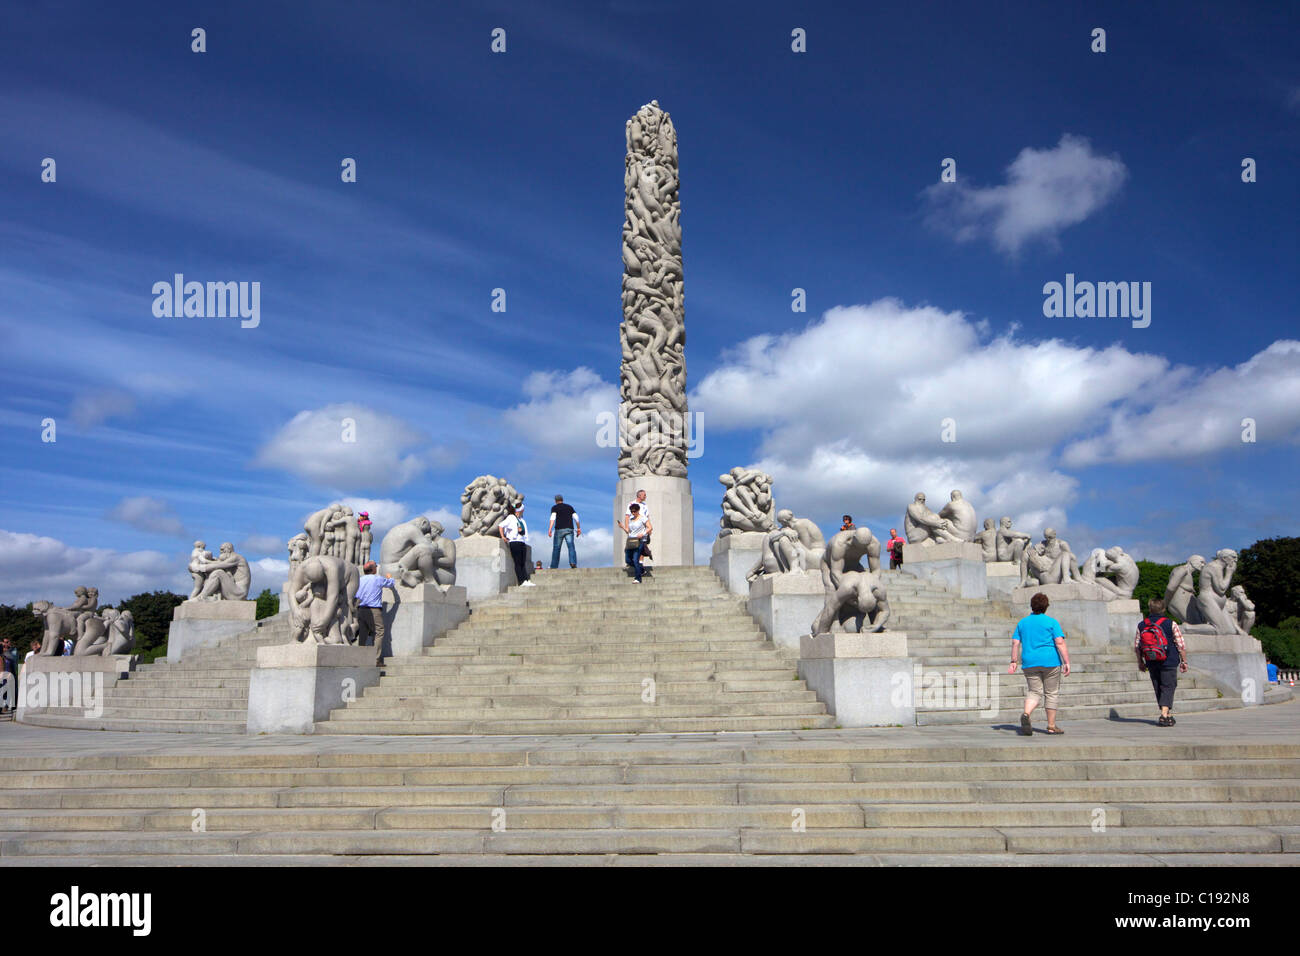 Monolith, by Gustav Vigeland, sculptures in granite in Vigeland Sculpture Park, Frognerparken, Oslo, Norway, Europe Stock Photo